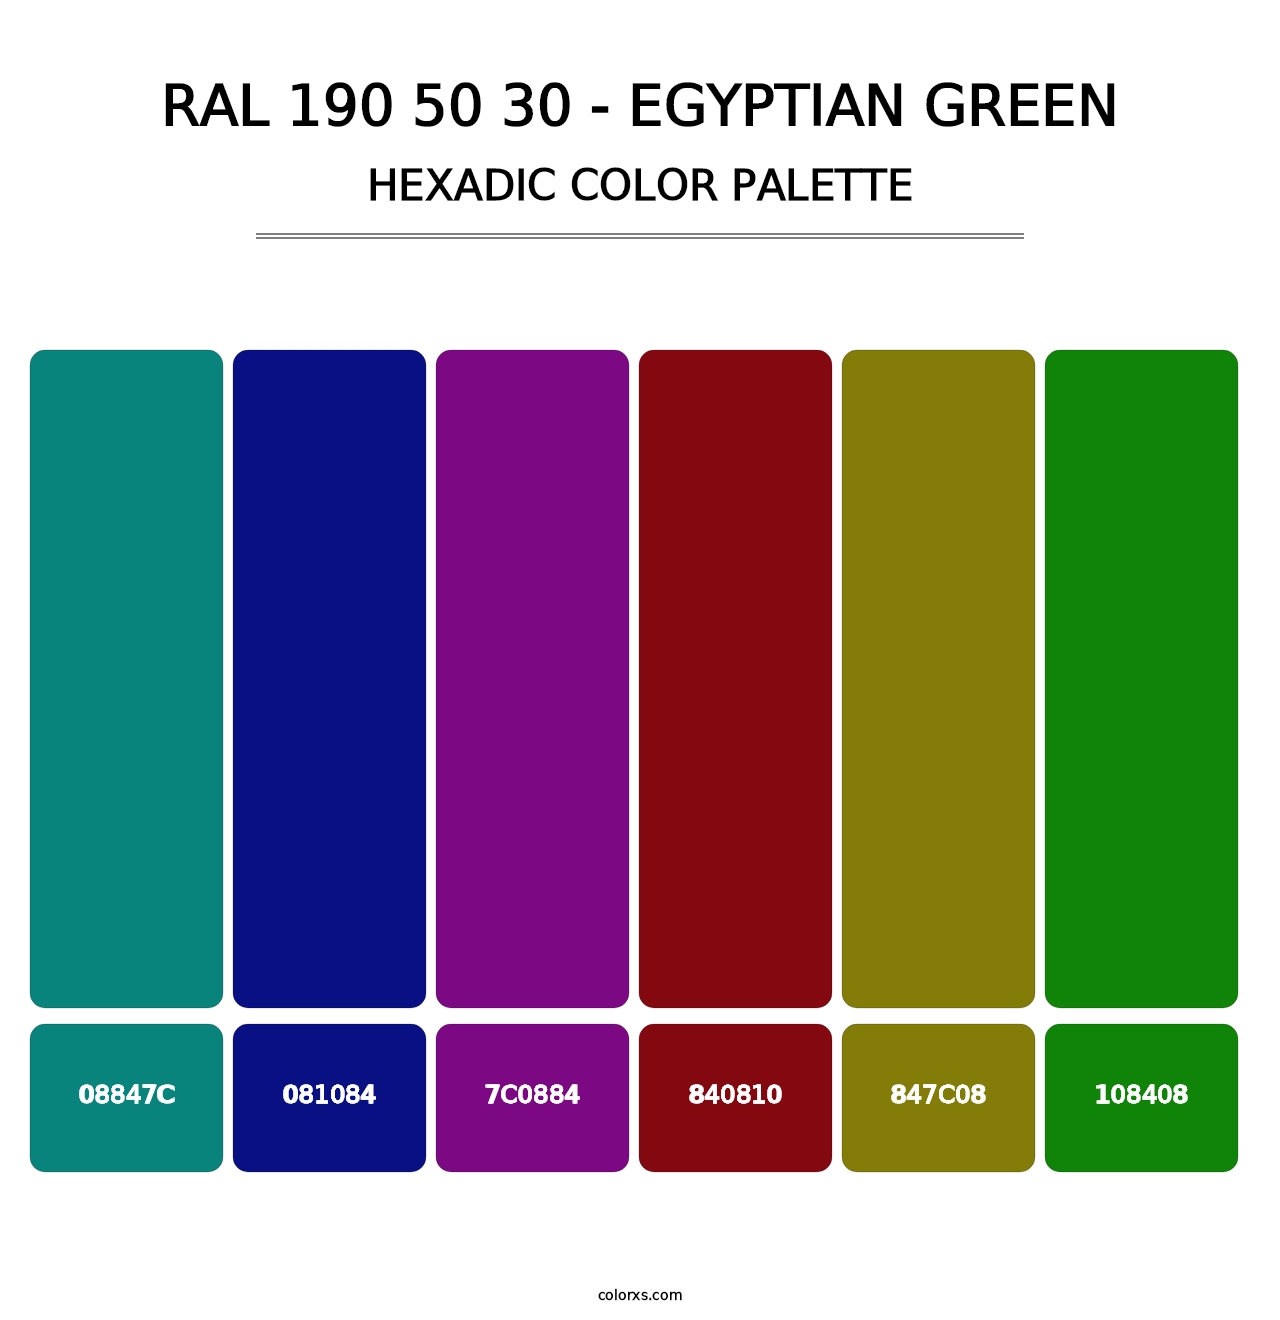 RAL 190 50 30 - Egyptian Green - Hexadic Color Palette